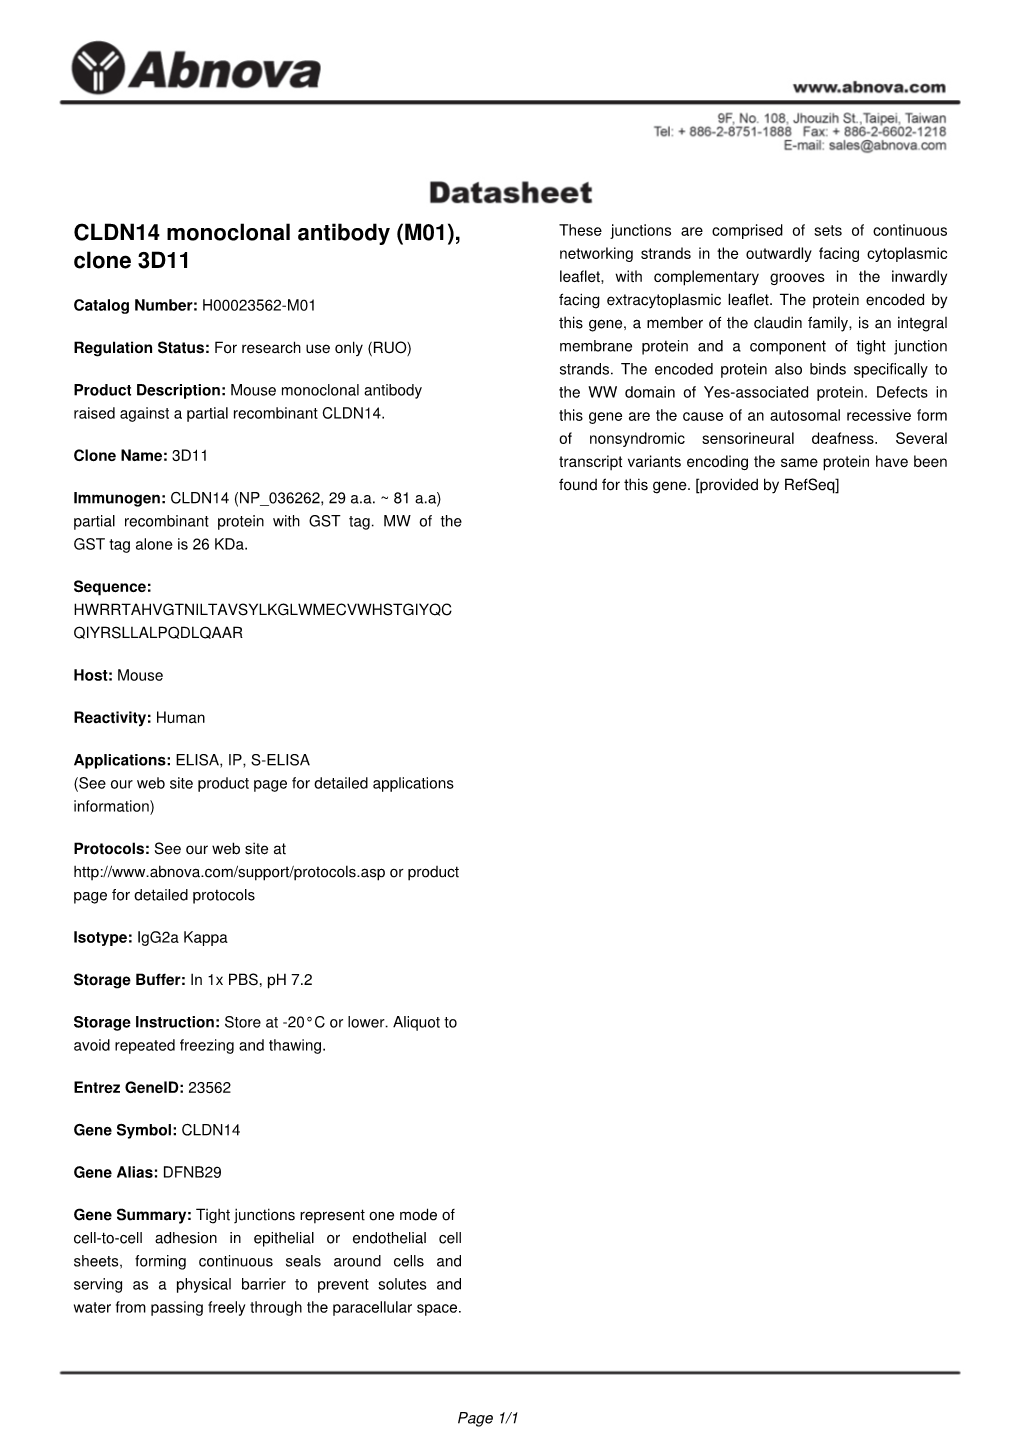 CLDN14 Monoclonal Antibody (M01), Clone 3D11